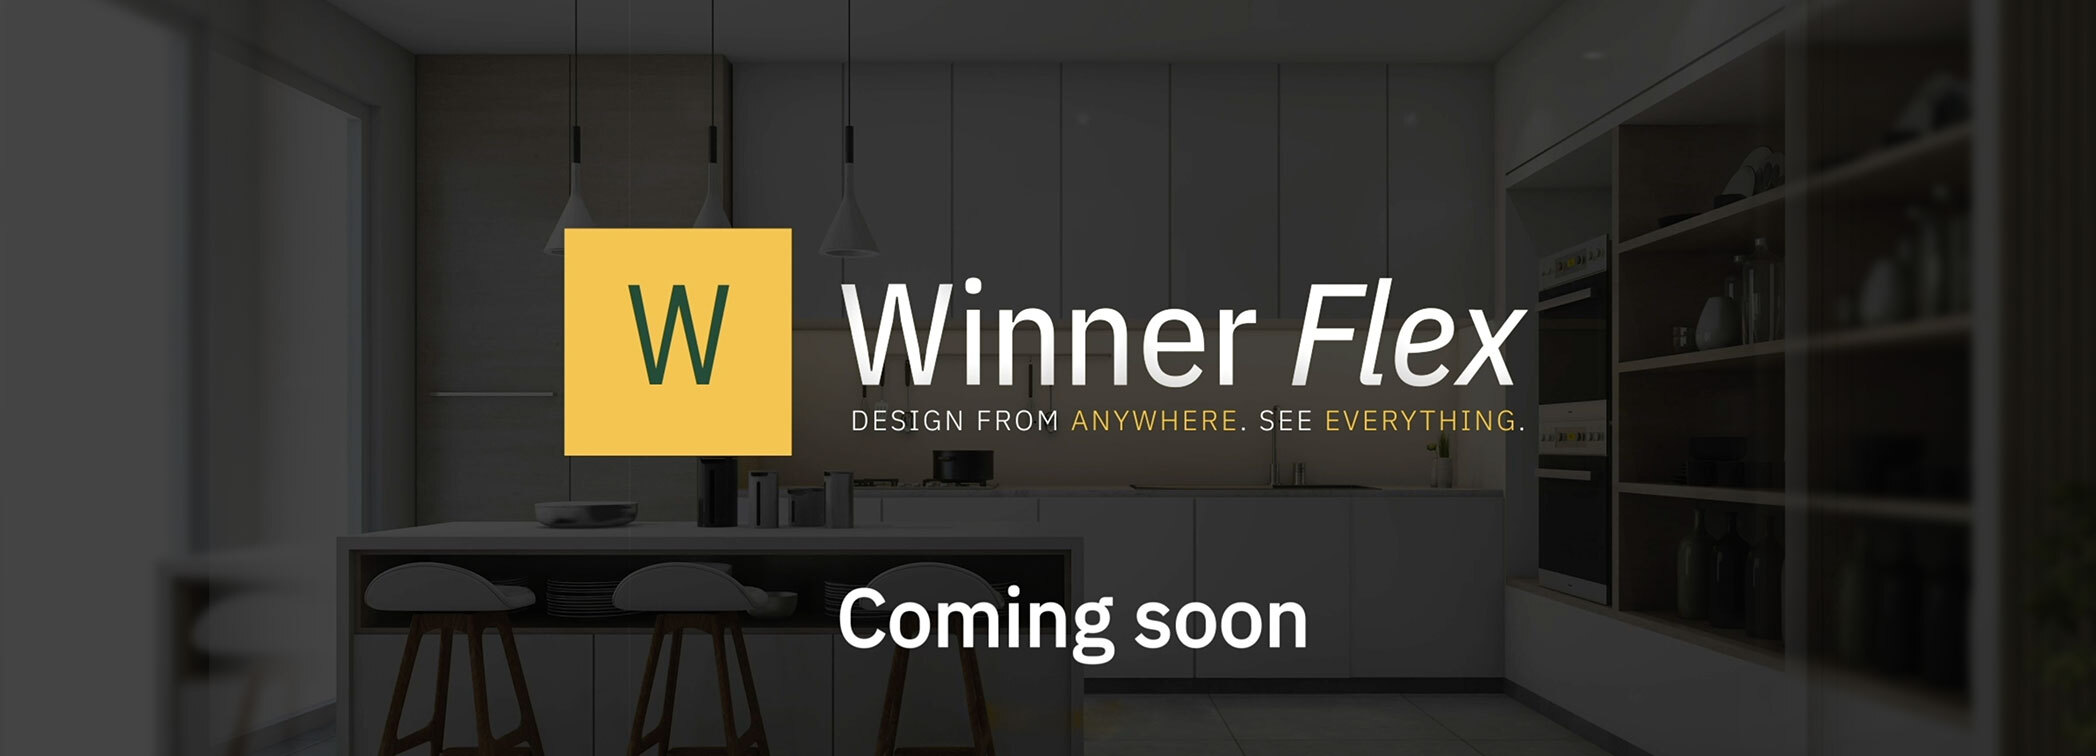 Compusoft to launch Winner Flex to support remote working